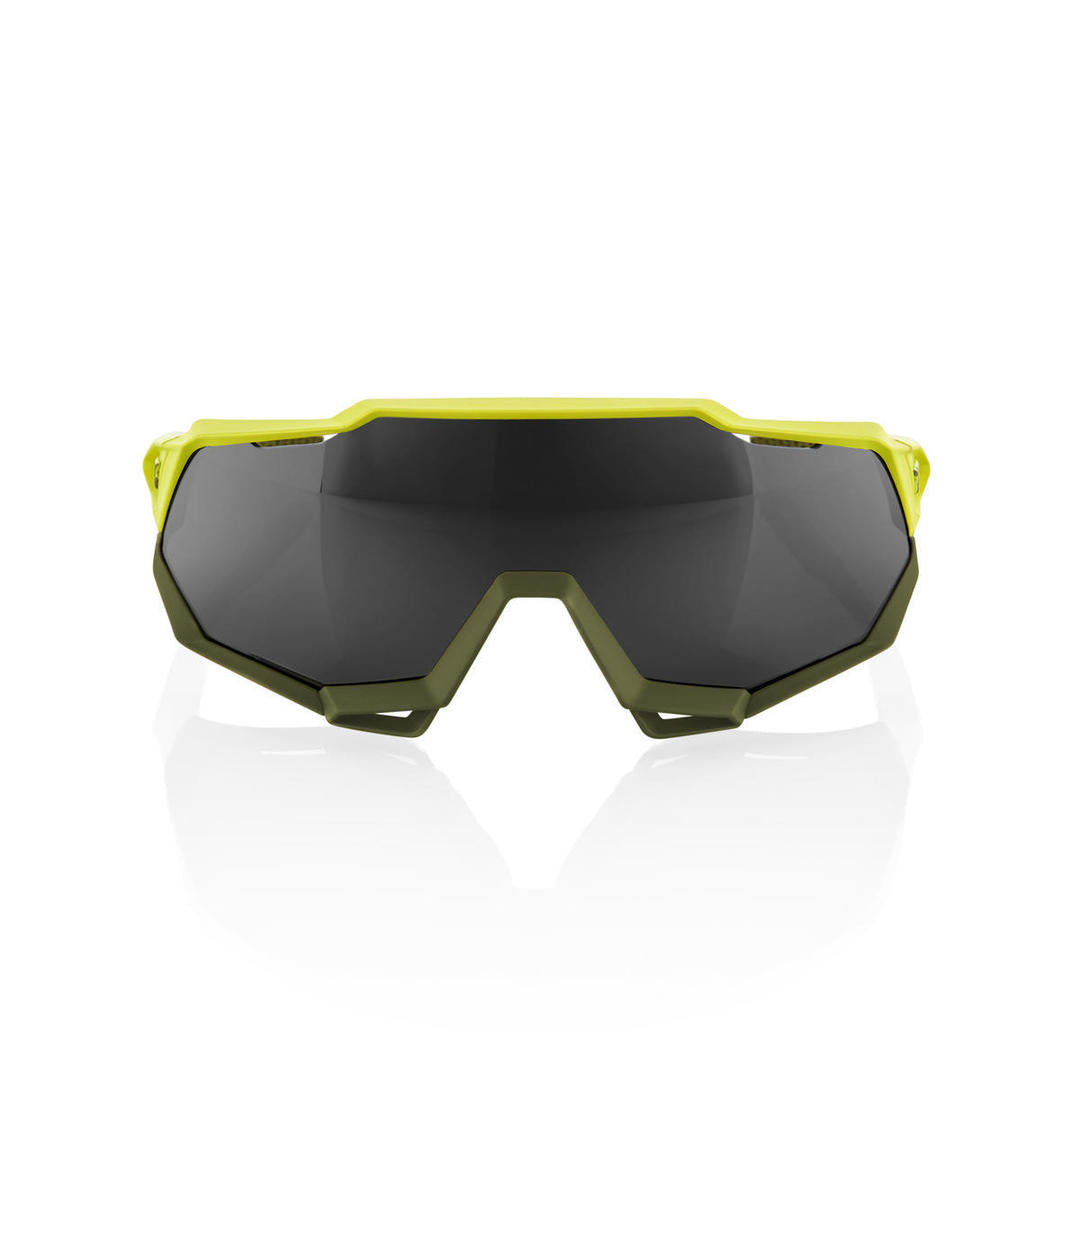 RIDE 100% Gafas de Sol Speedtrap Soft Tact Banana - Lente Espejo Negro